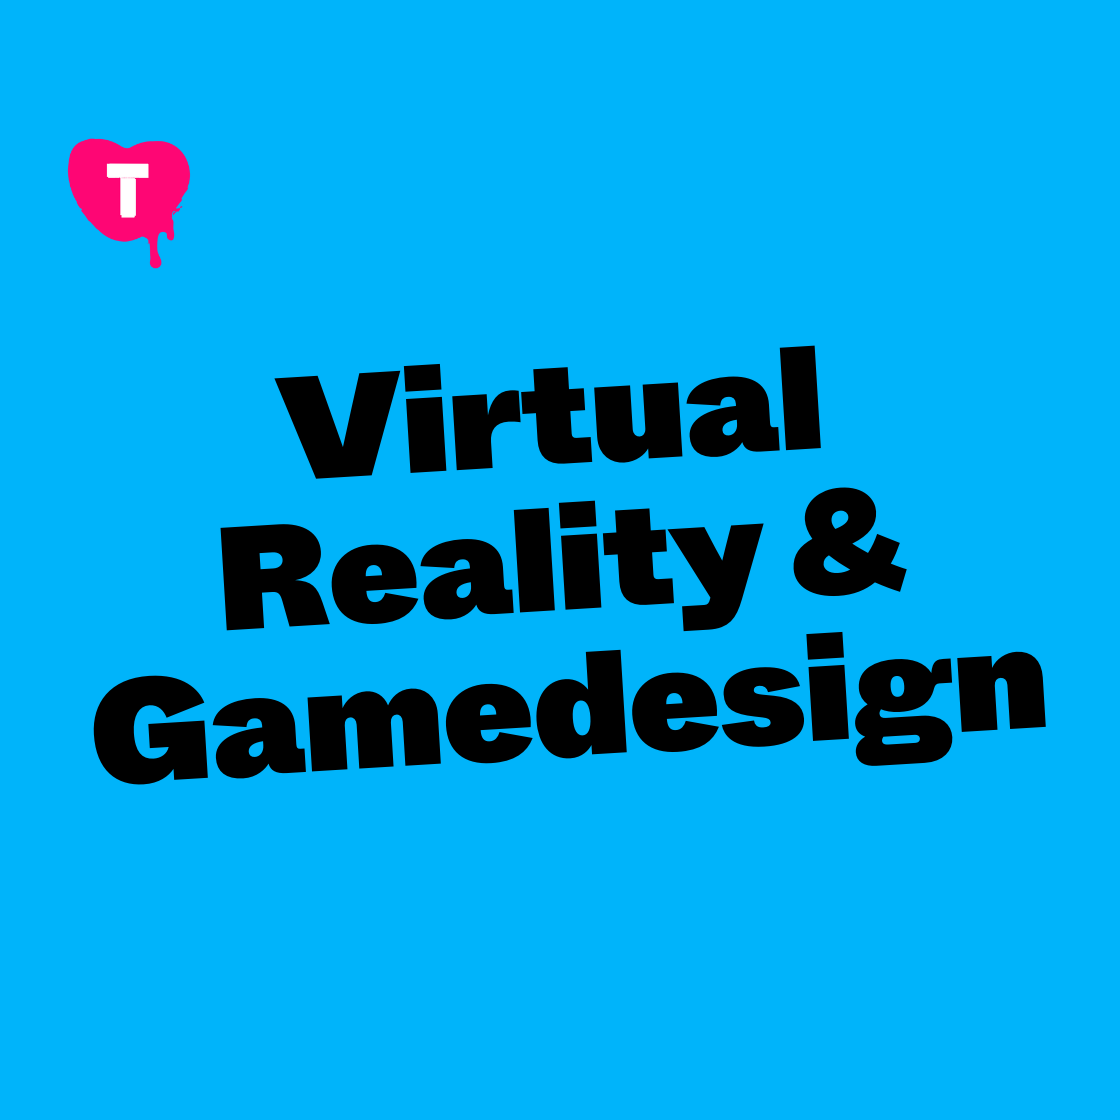 Virtual Reality & Gamedesign